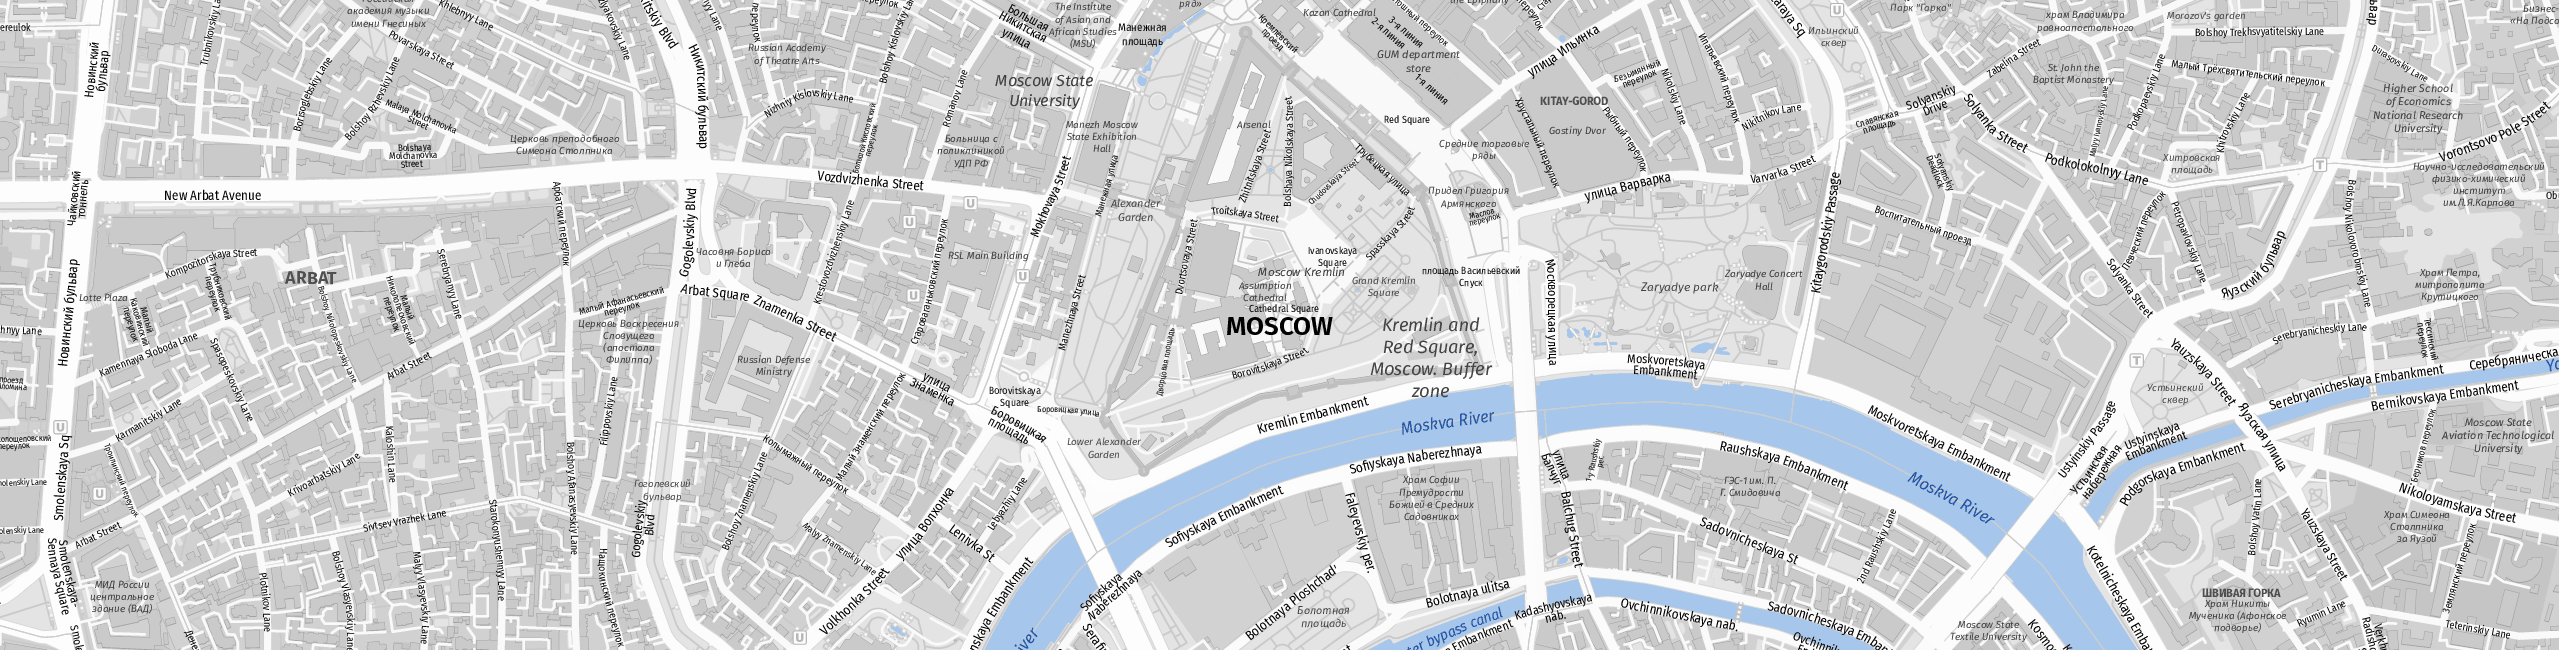 Stadtplan Moskau zum Downloaden.